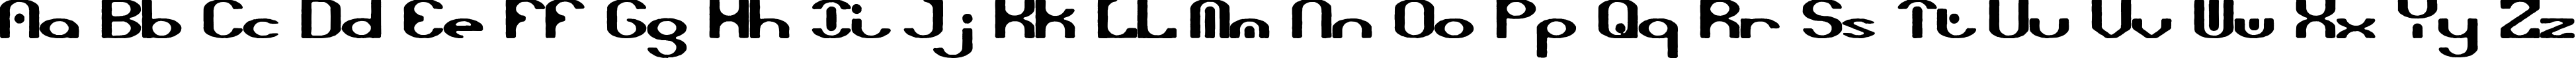 Пример написания английского алфавита шрифтом Opiated BRK